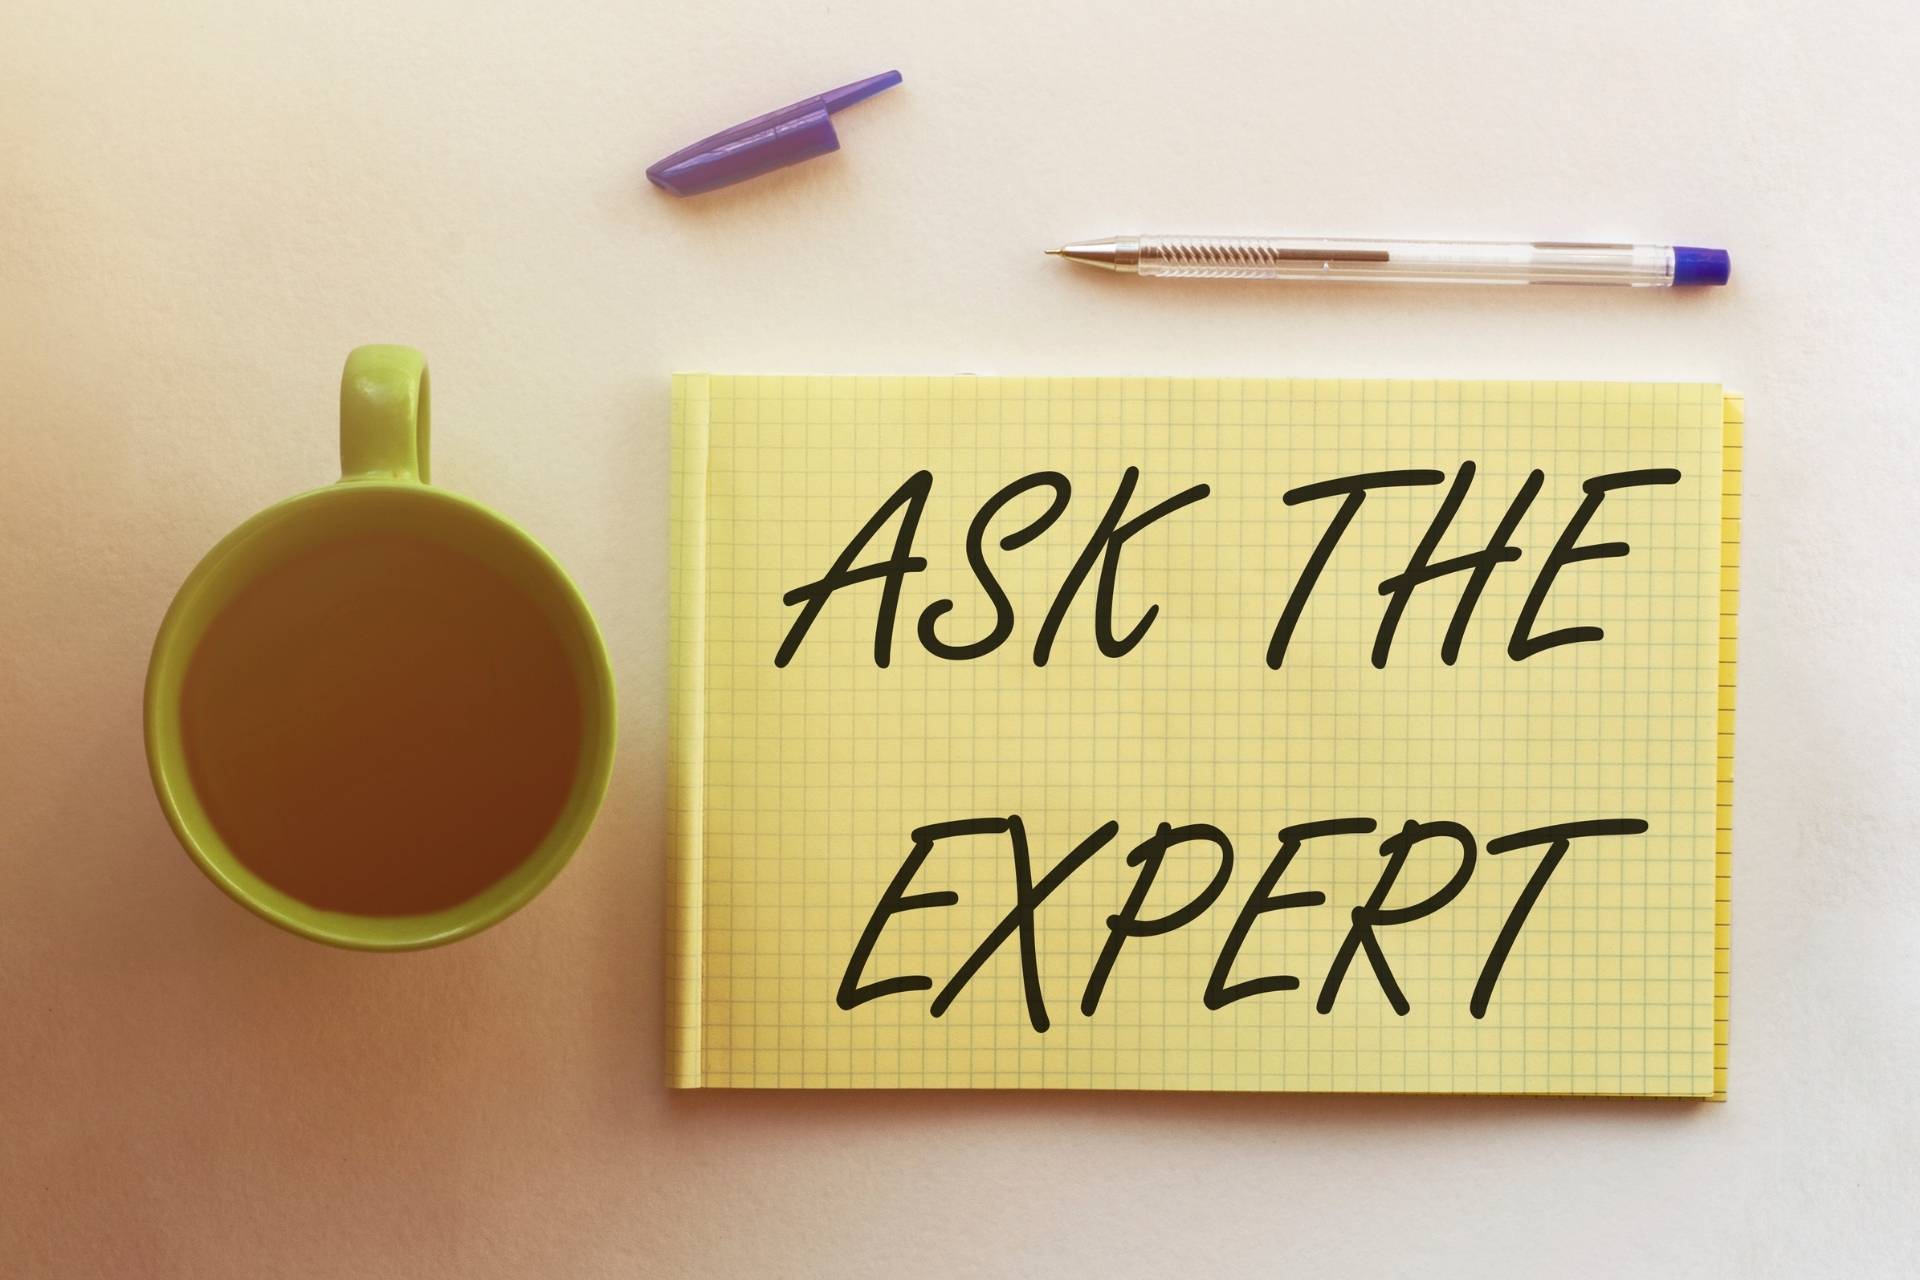 Ask the expert - Dr Deborah